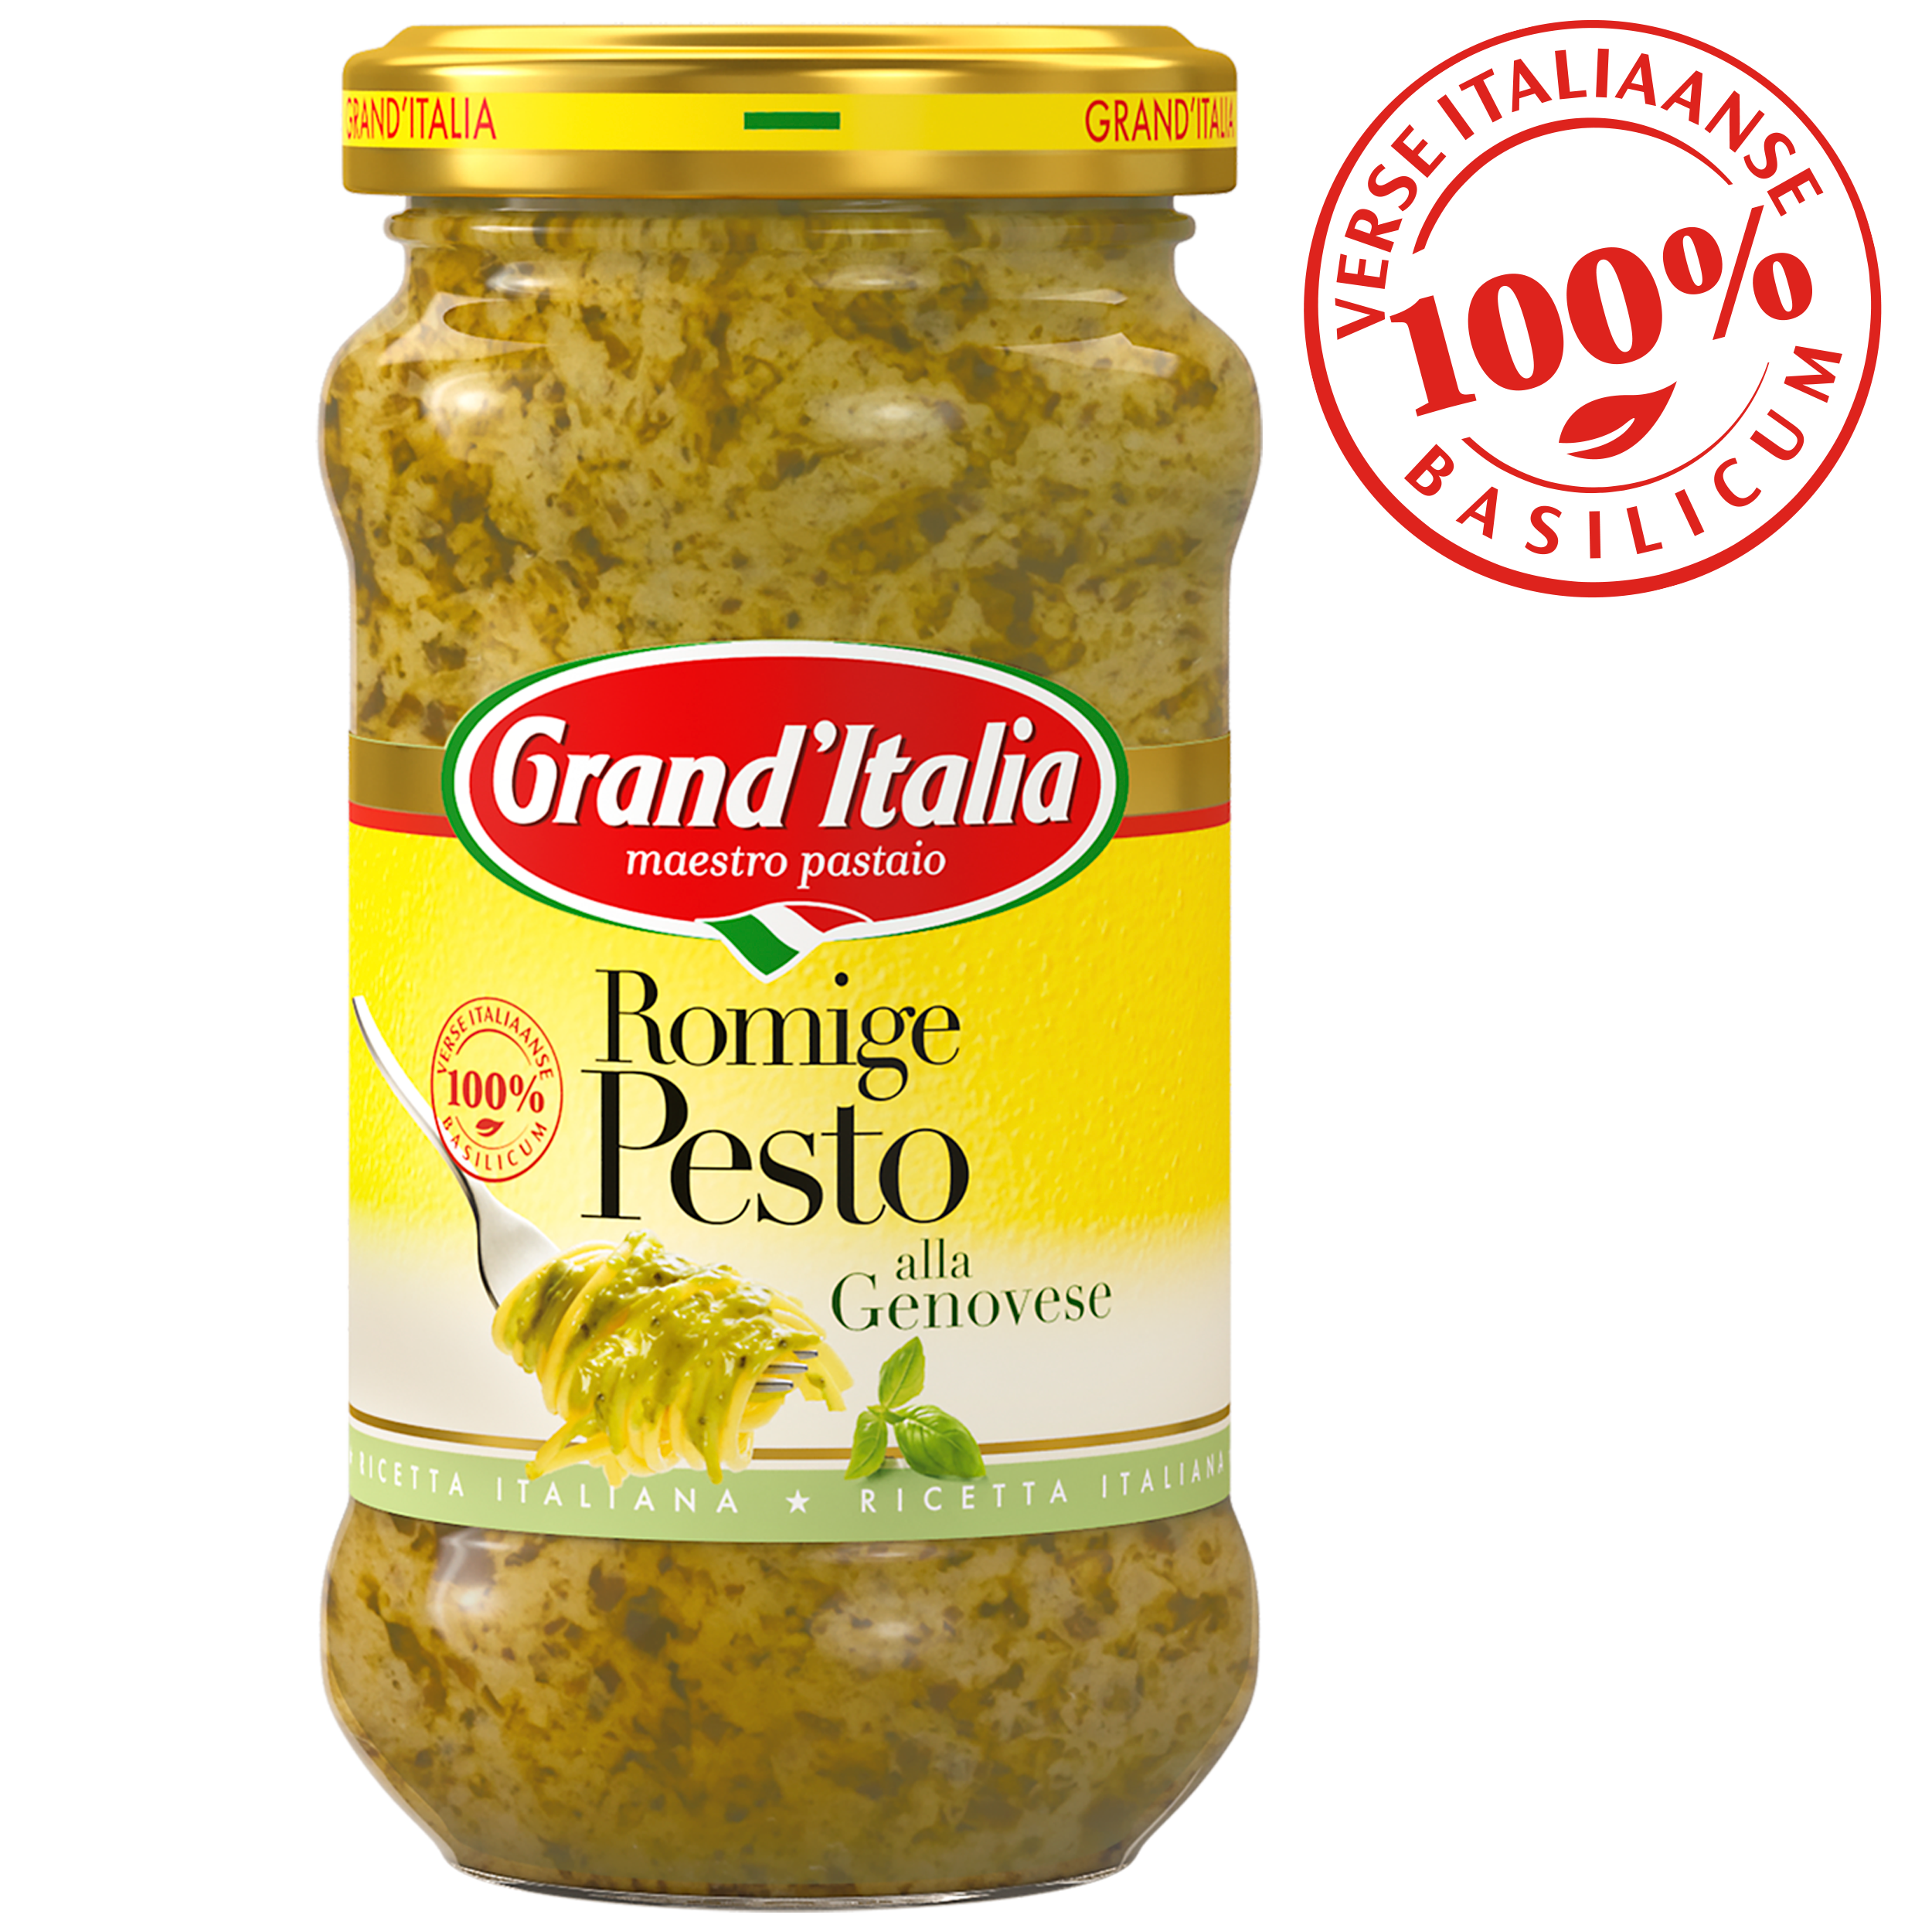 Romige Pesto alla genovese 185g Grand'Italia - claim